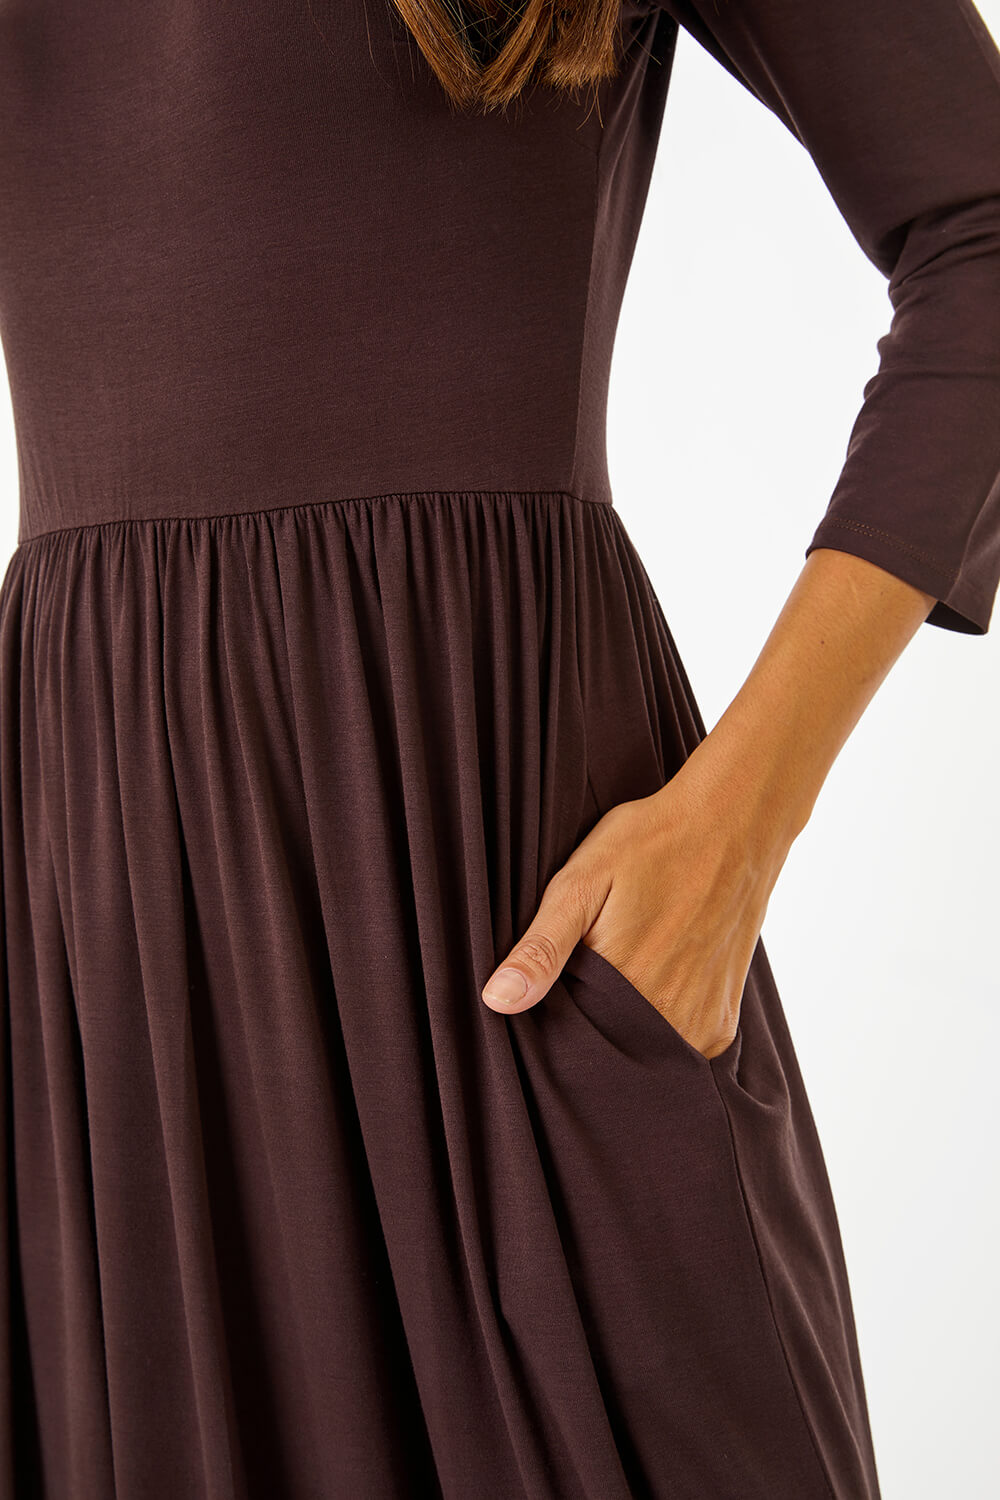 Chocolate Stretch Jersey Pocket Midi Dress, Image 4 of 5